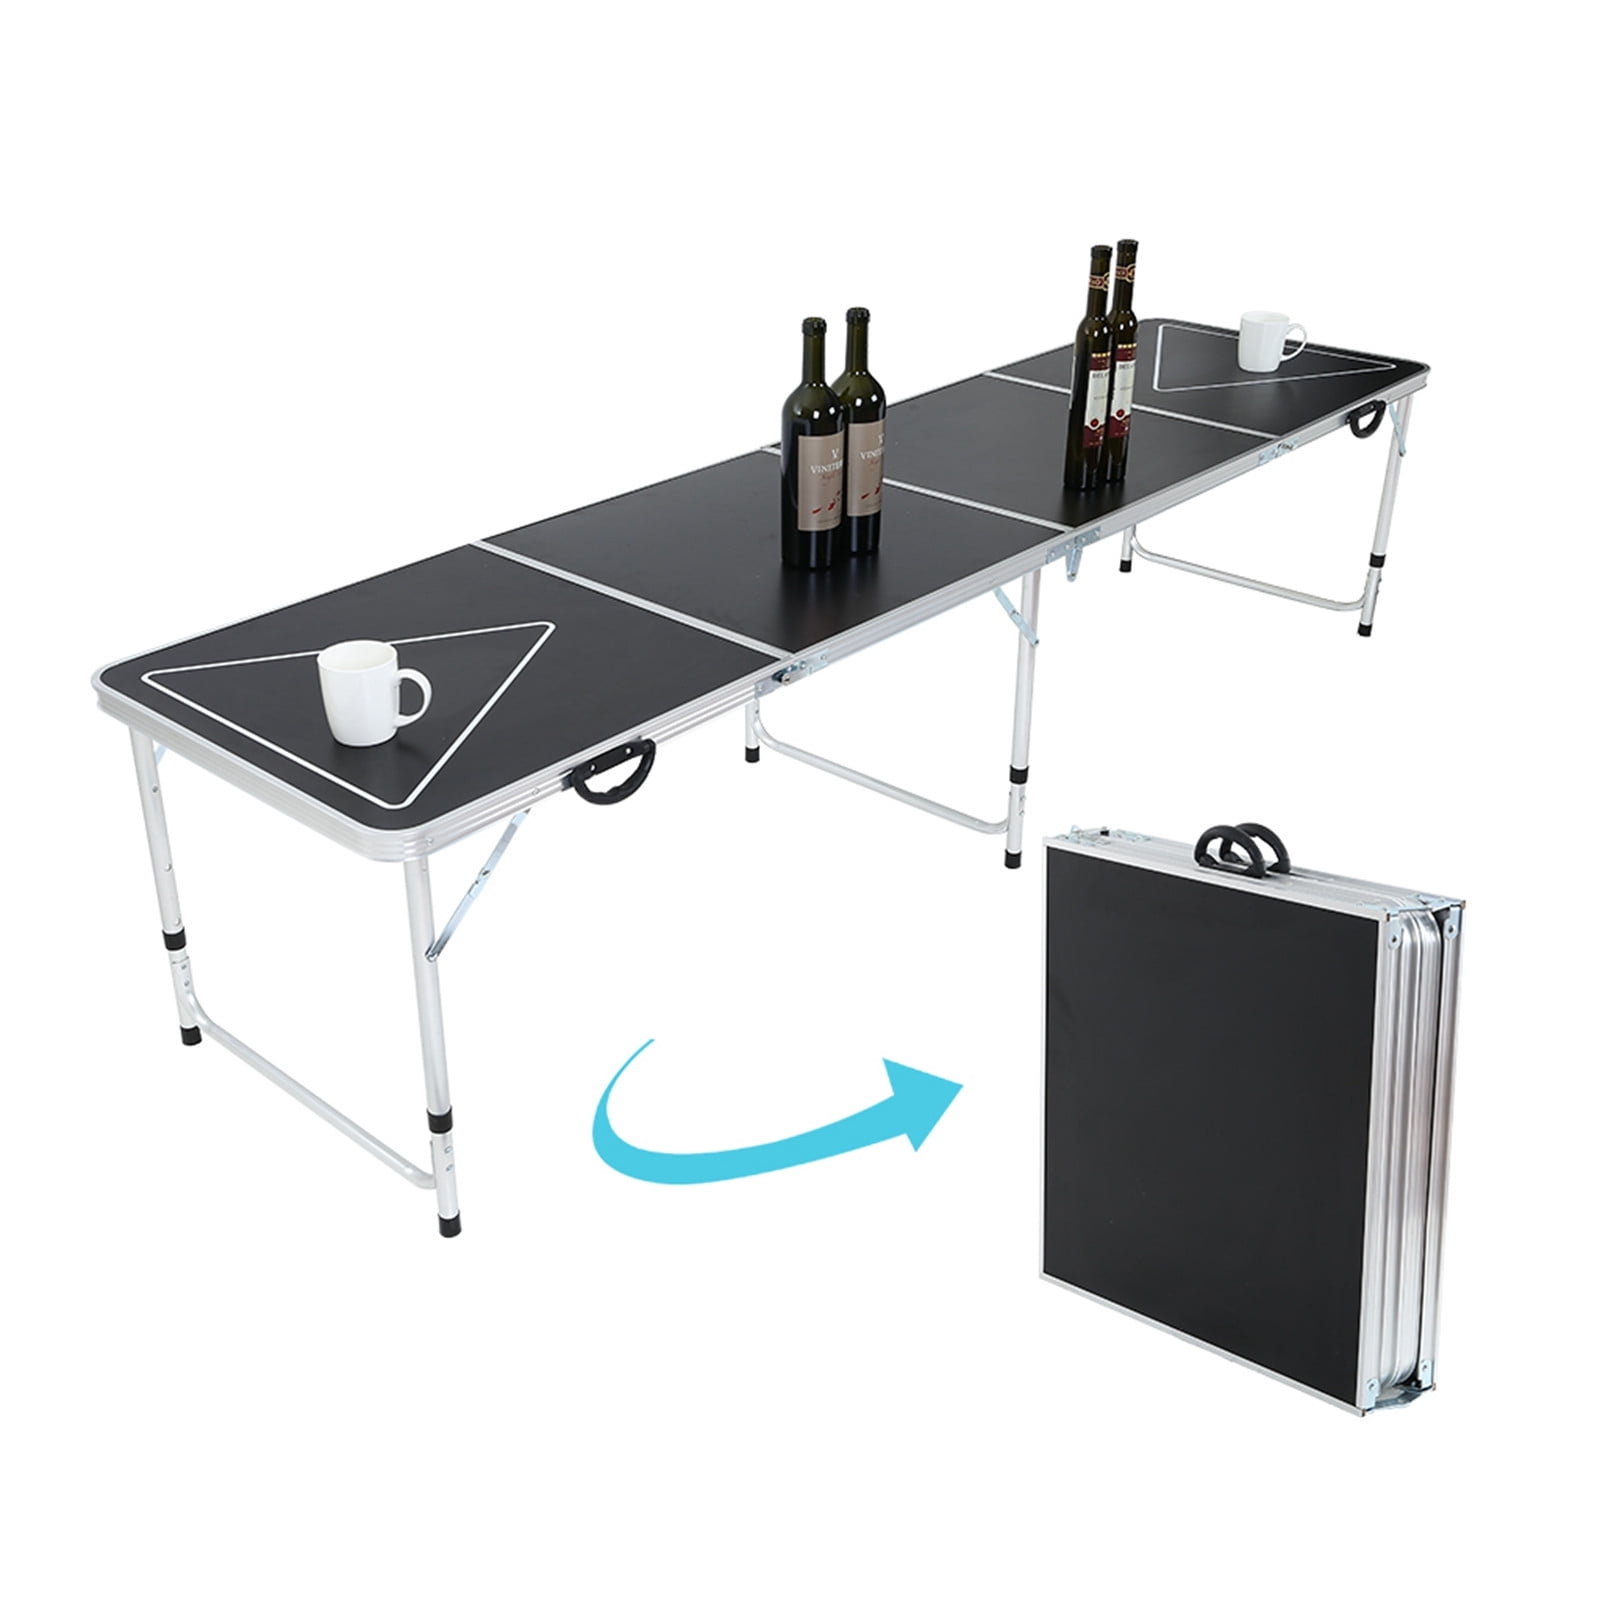 8 Foot Beer Pong Table Premium Outdoor Folding Table Adjustable Height Outdoor 